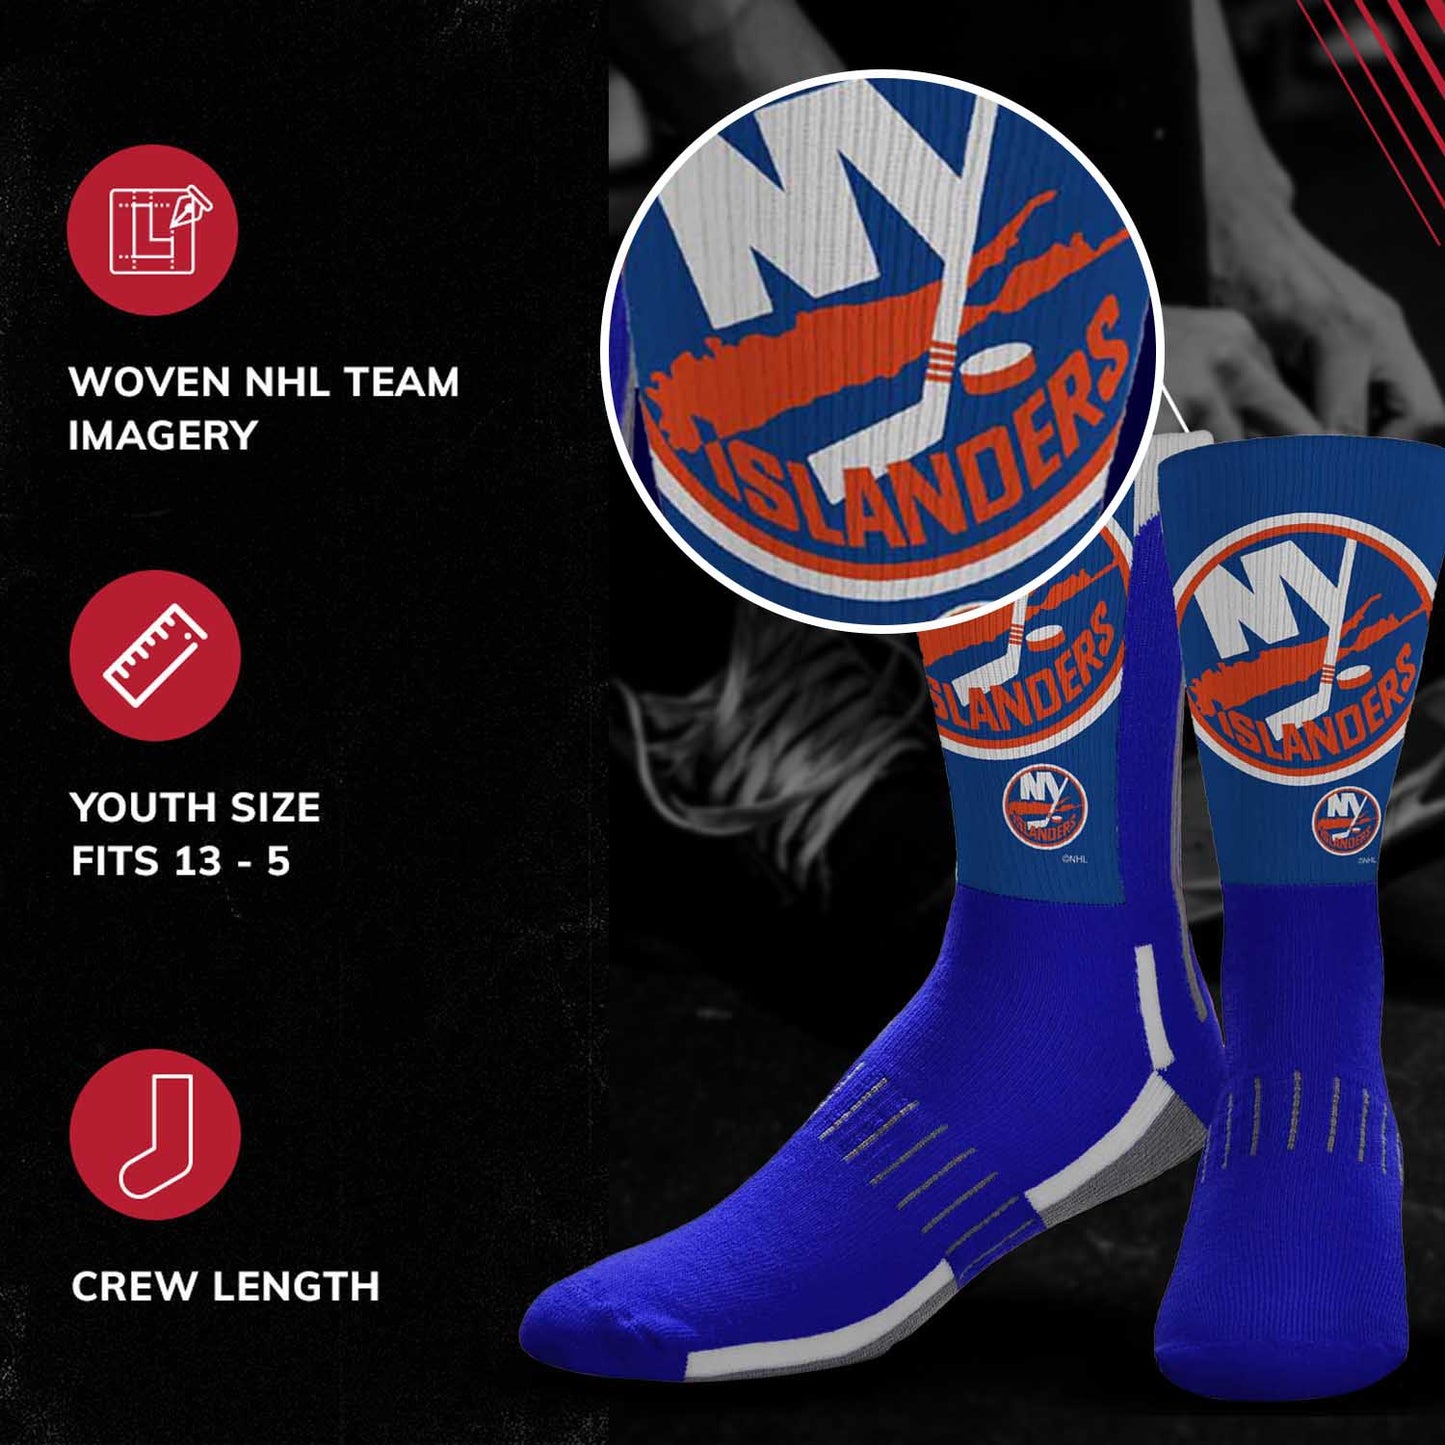 New York Islanders Adult NHL Zoom Curve Team Crew Socks - Royal